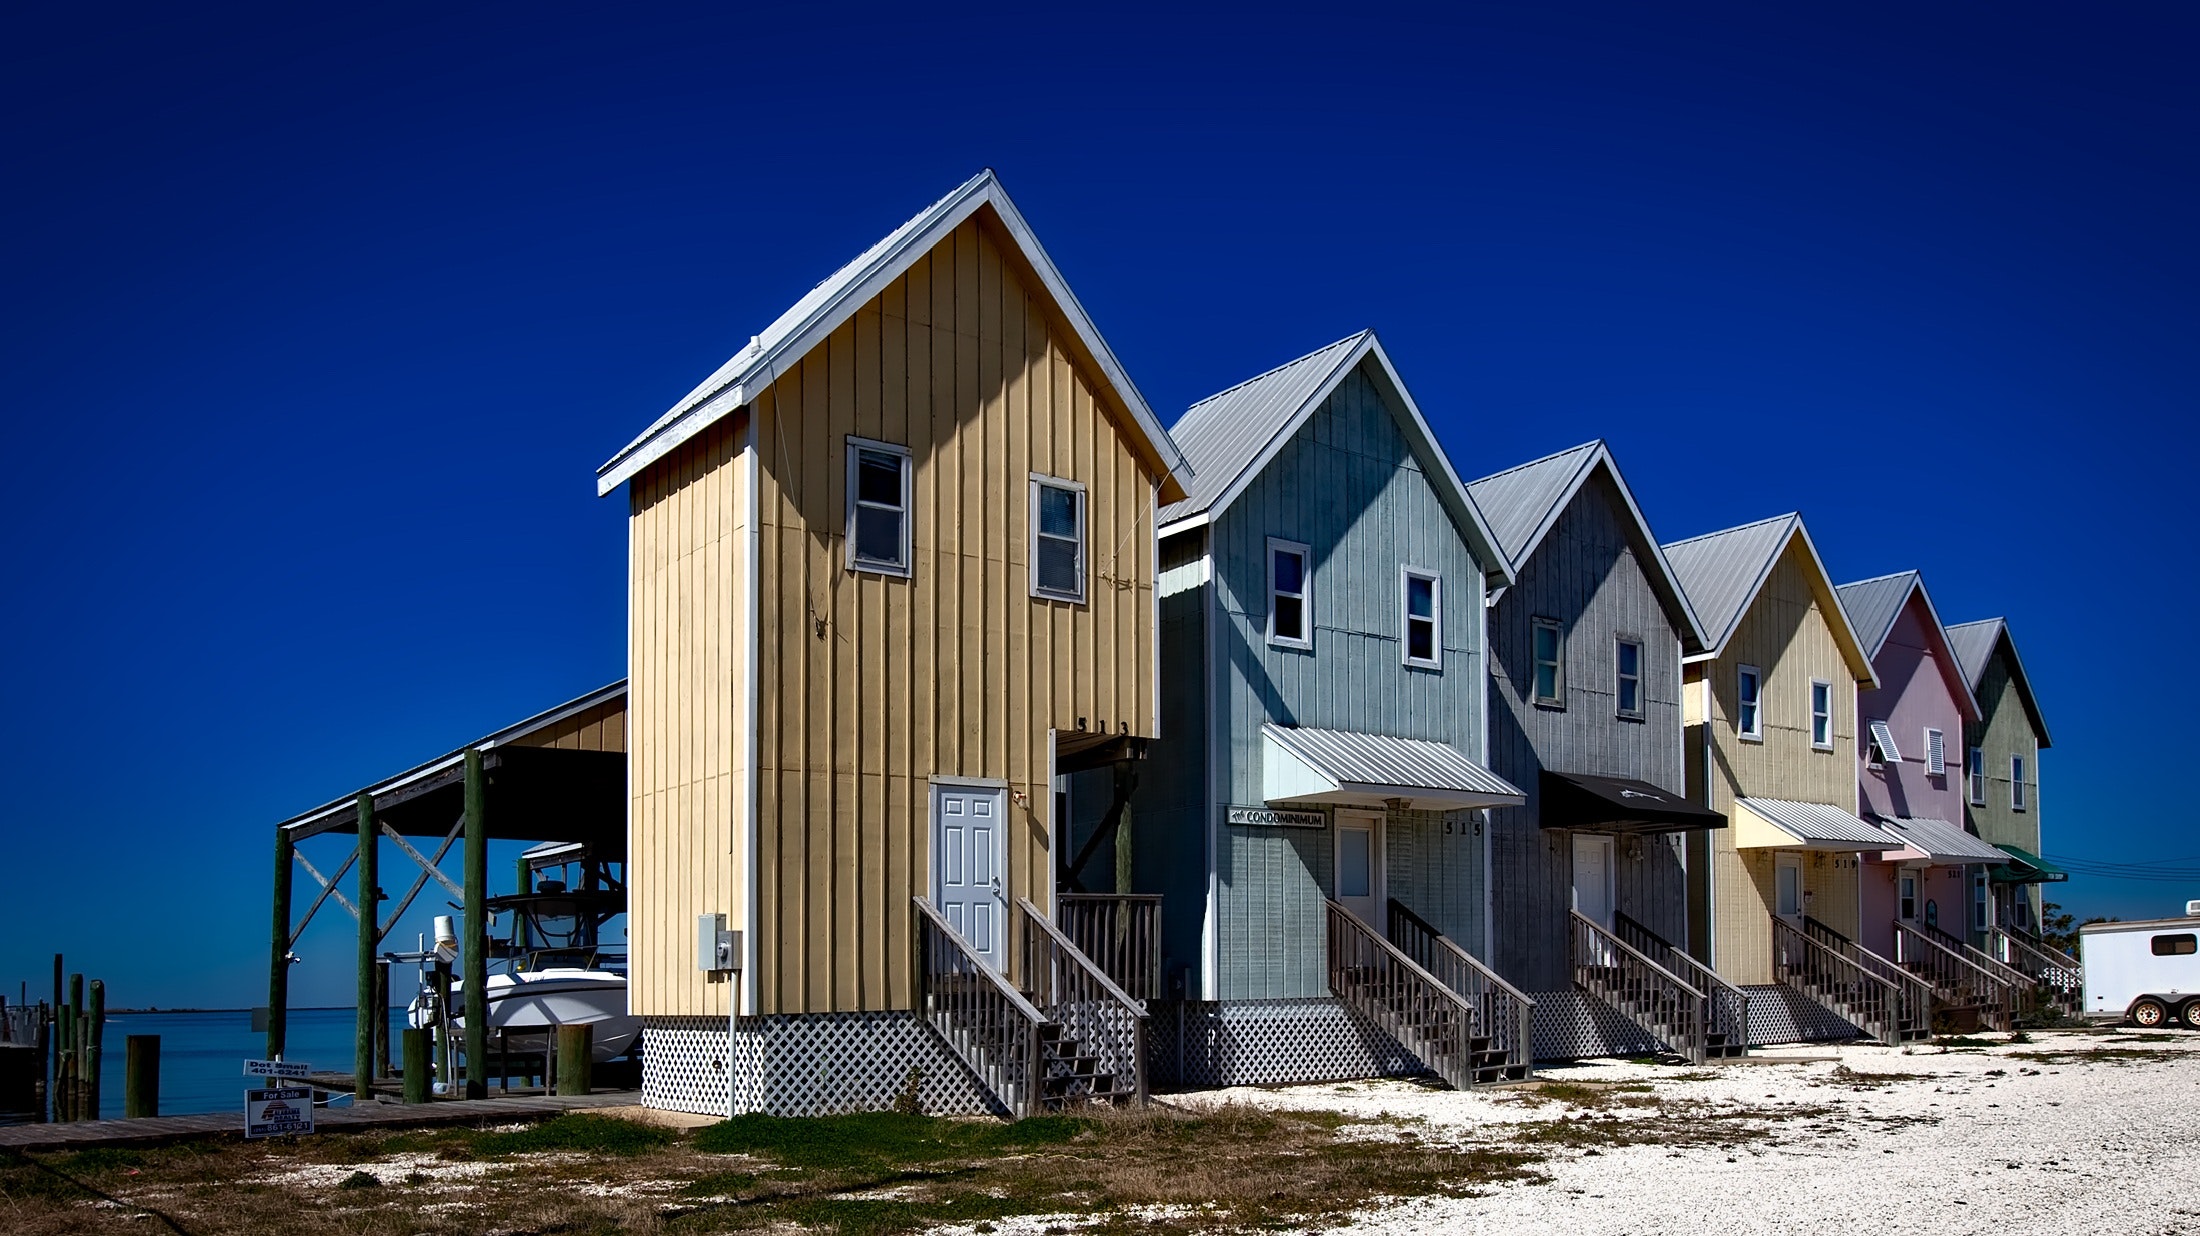 Inline house near seashore during daytime photo